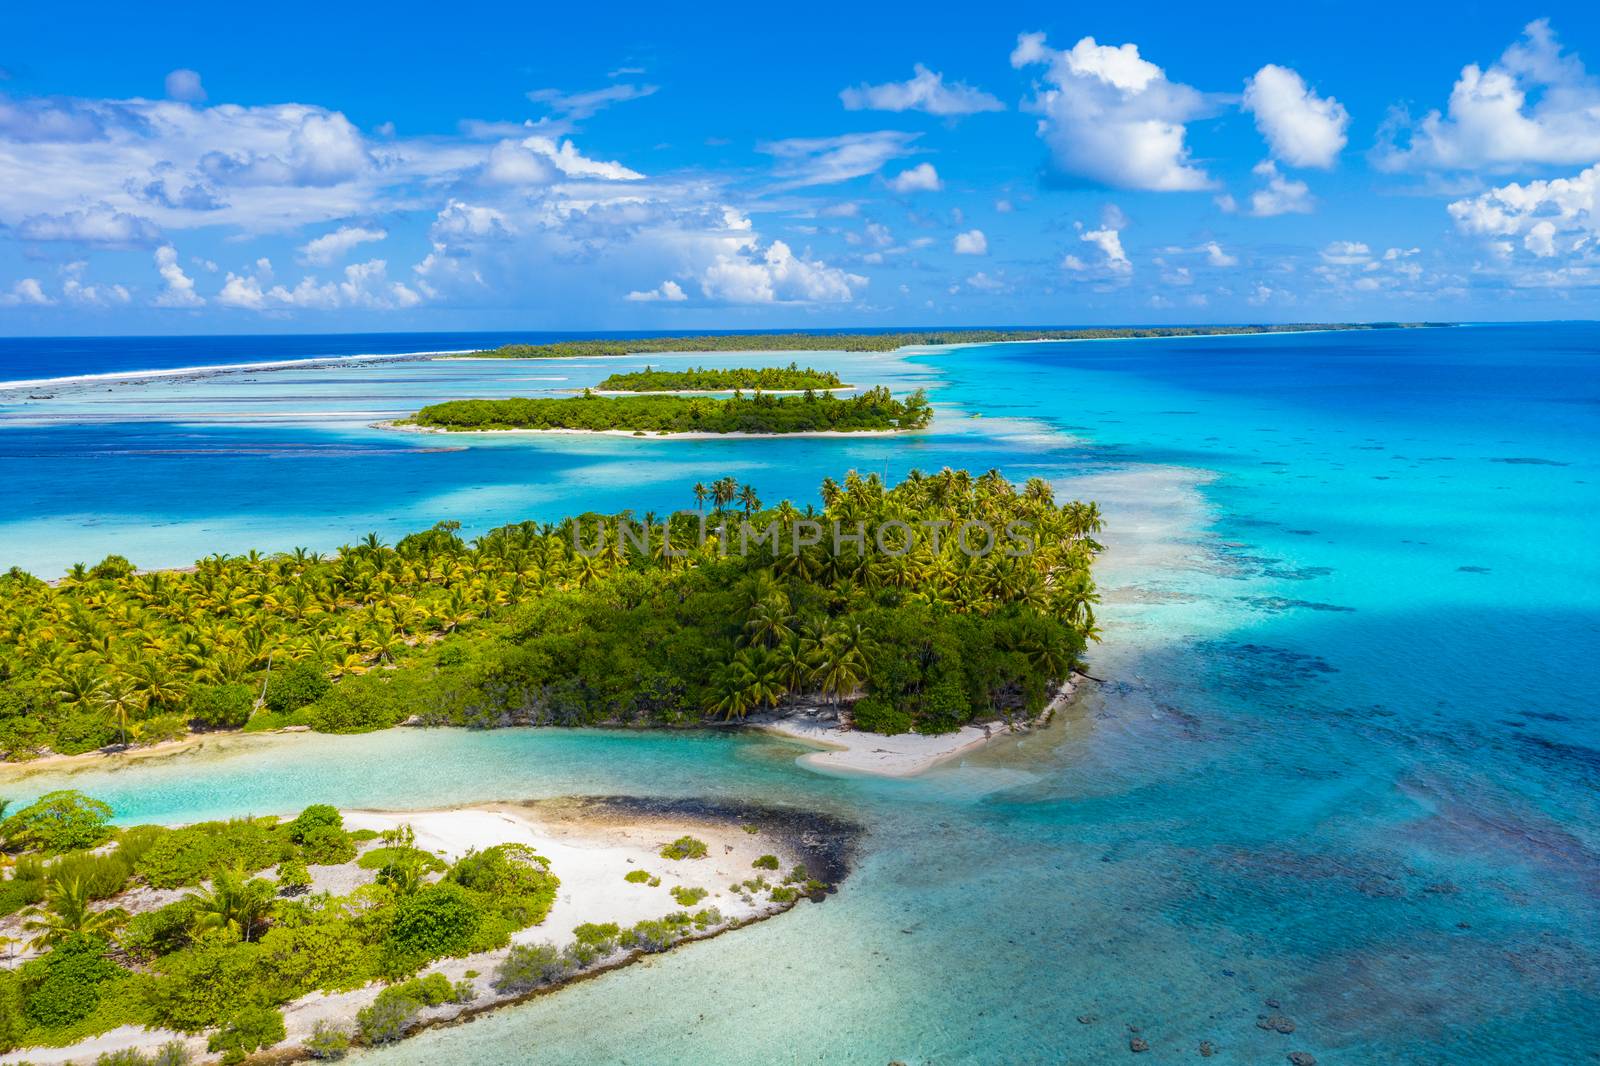 Drone image of Rangiroa atoll island reef motu in French Polynesia Tahiti by Maridav